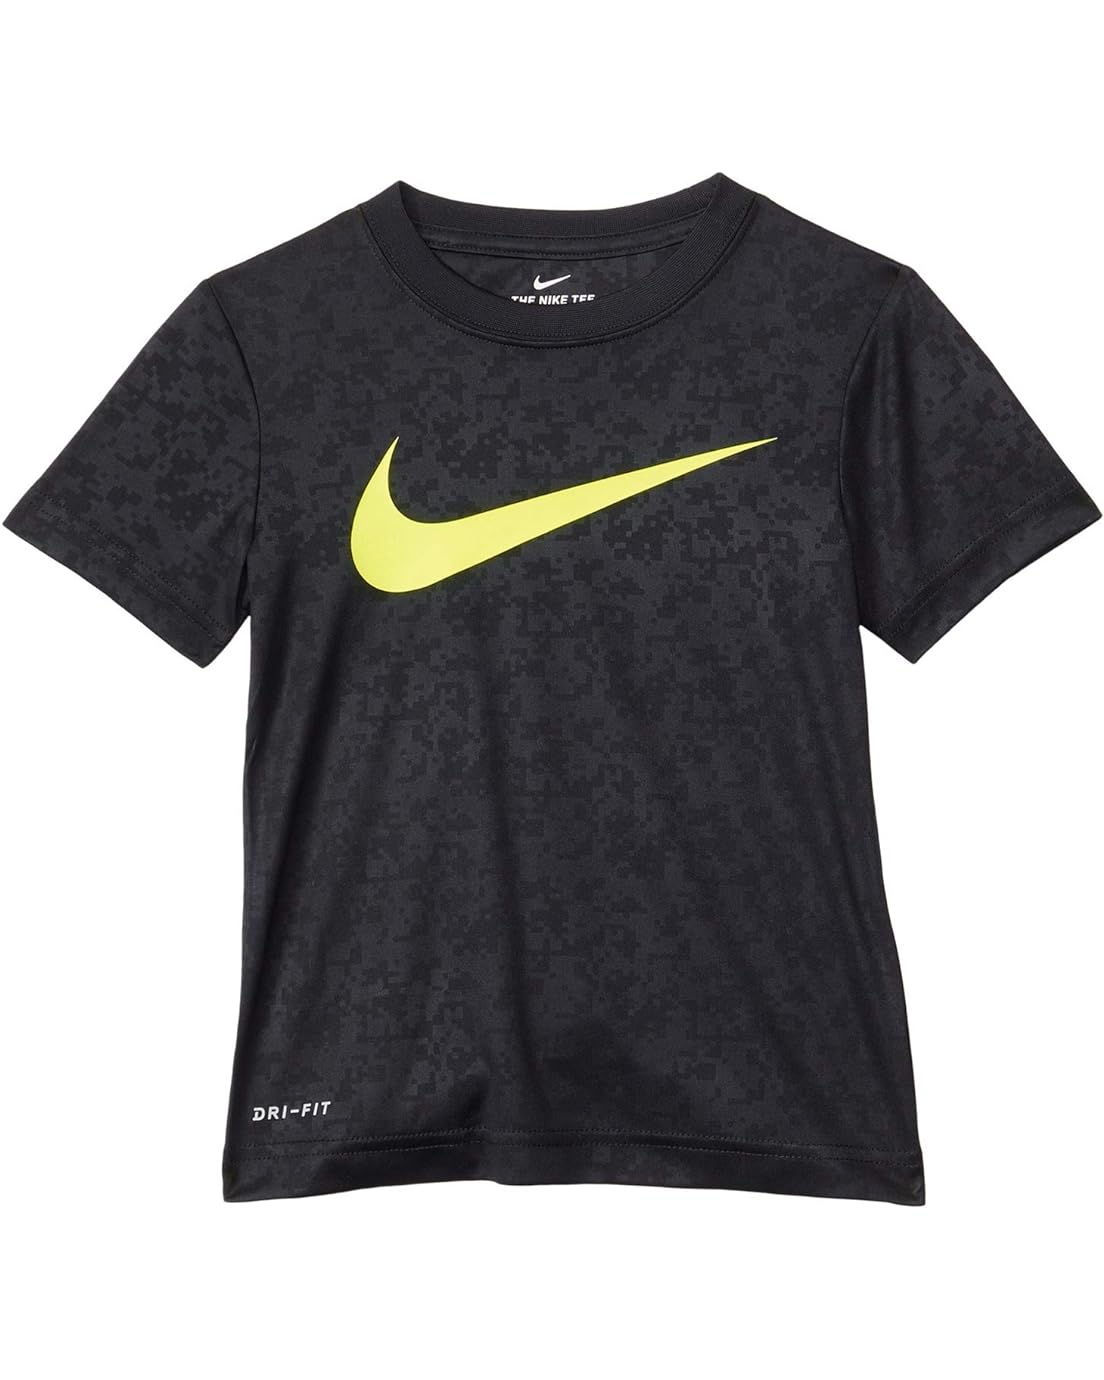 Nike Kids All Over Print Swoosh T-Shirt (Toddler)